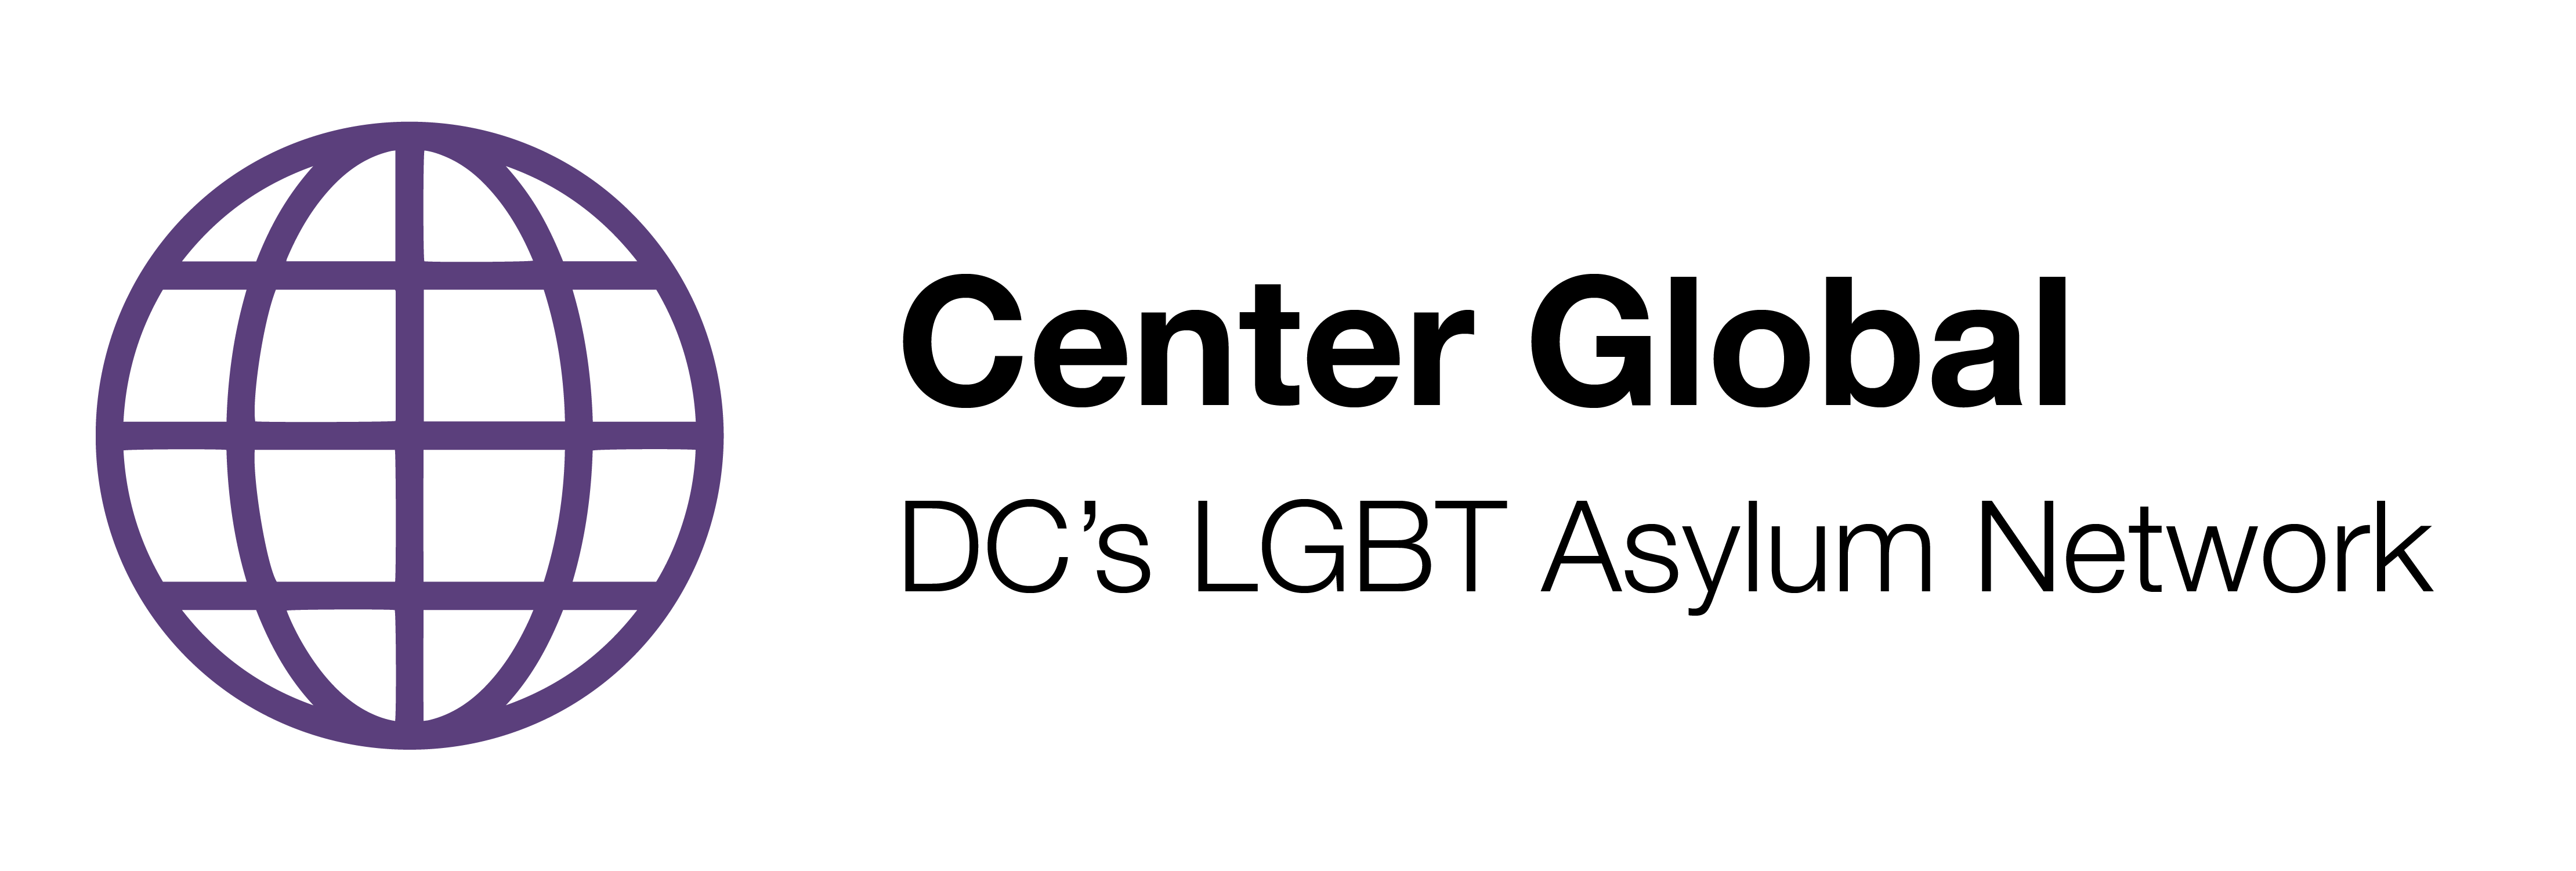 Center Global Virtual Pride Celebration